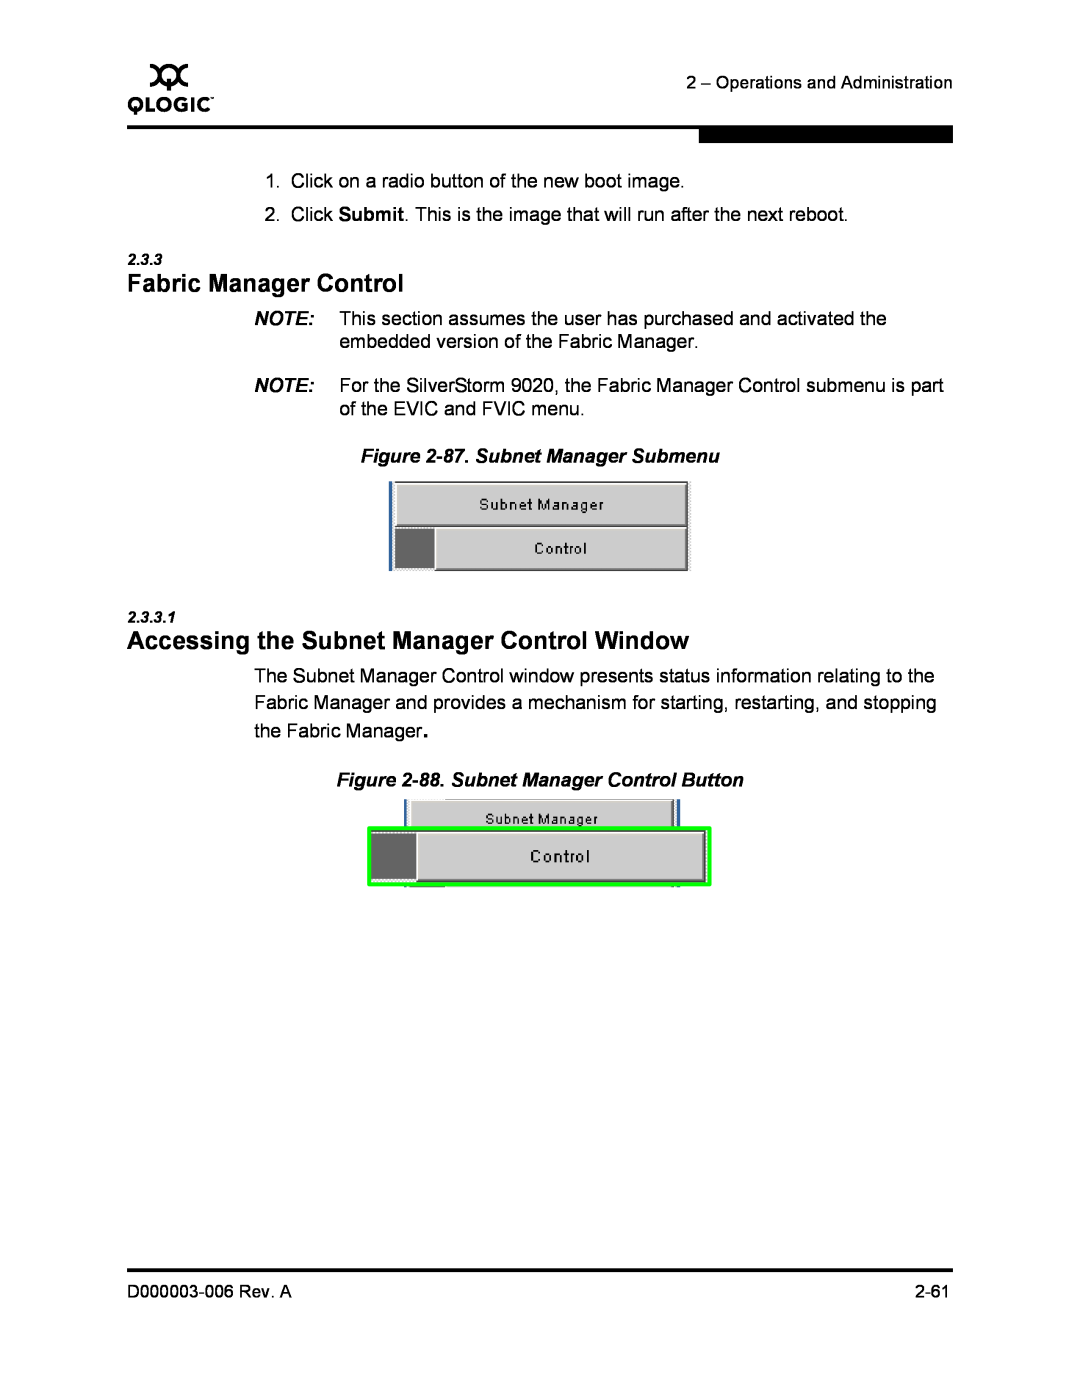 Q-Logic 9000 manual Fabric Manager Control, Accessing the Subnet Manager Control Window, 87. Subnet Manager Submenu 